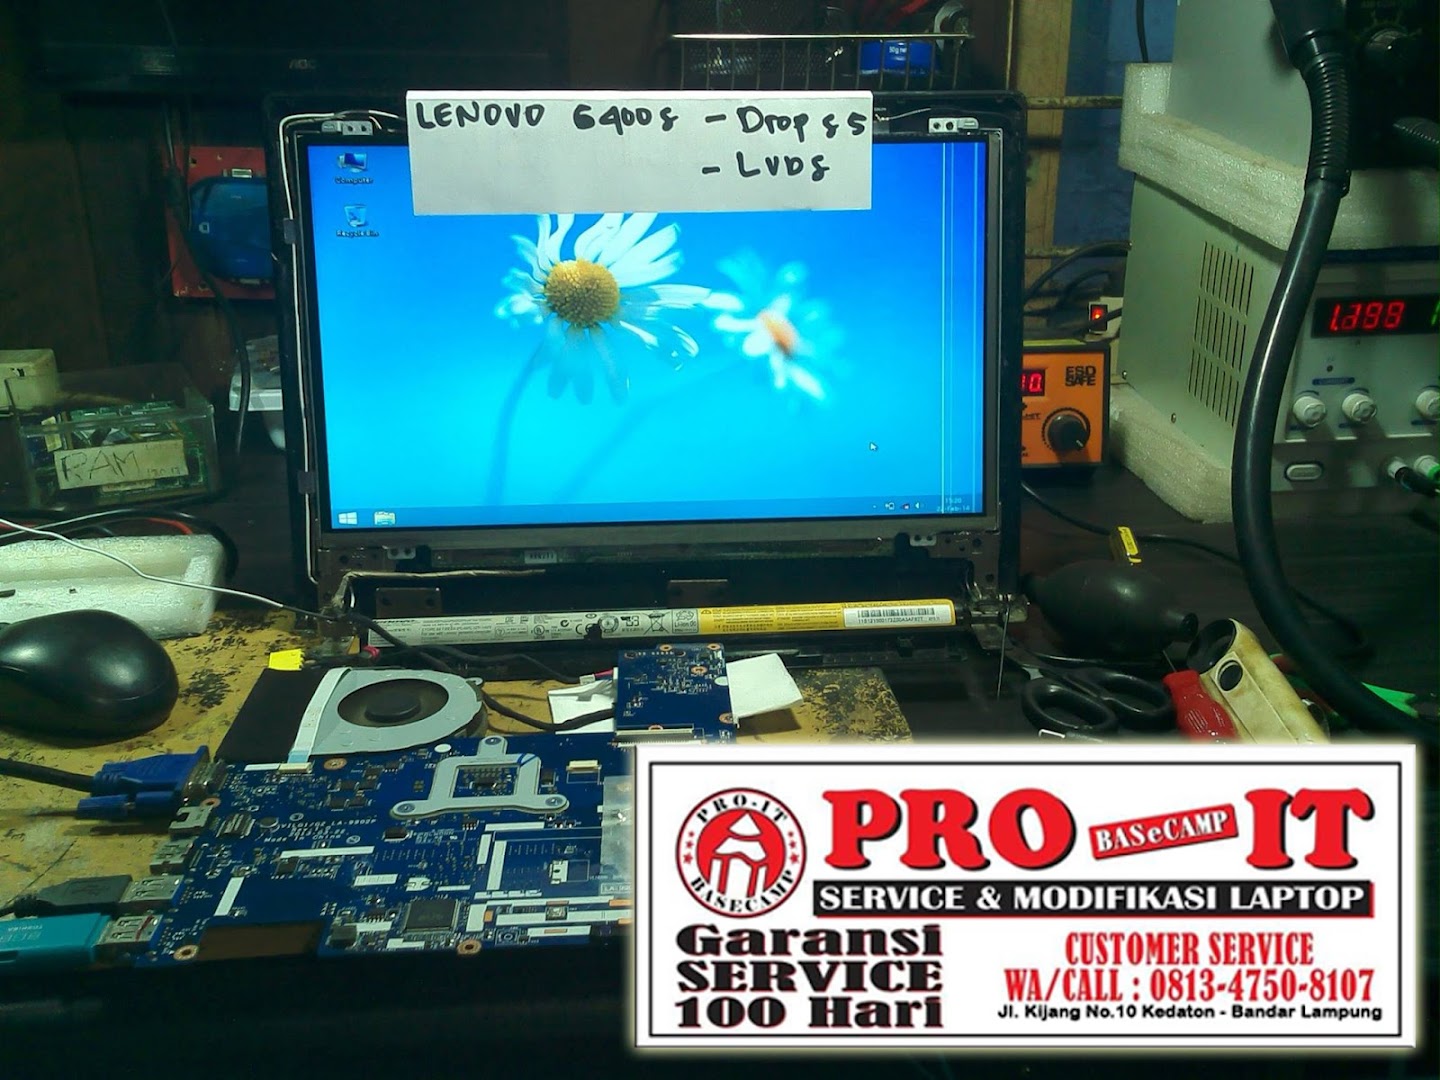 Pro-it Service Laptop Photo